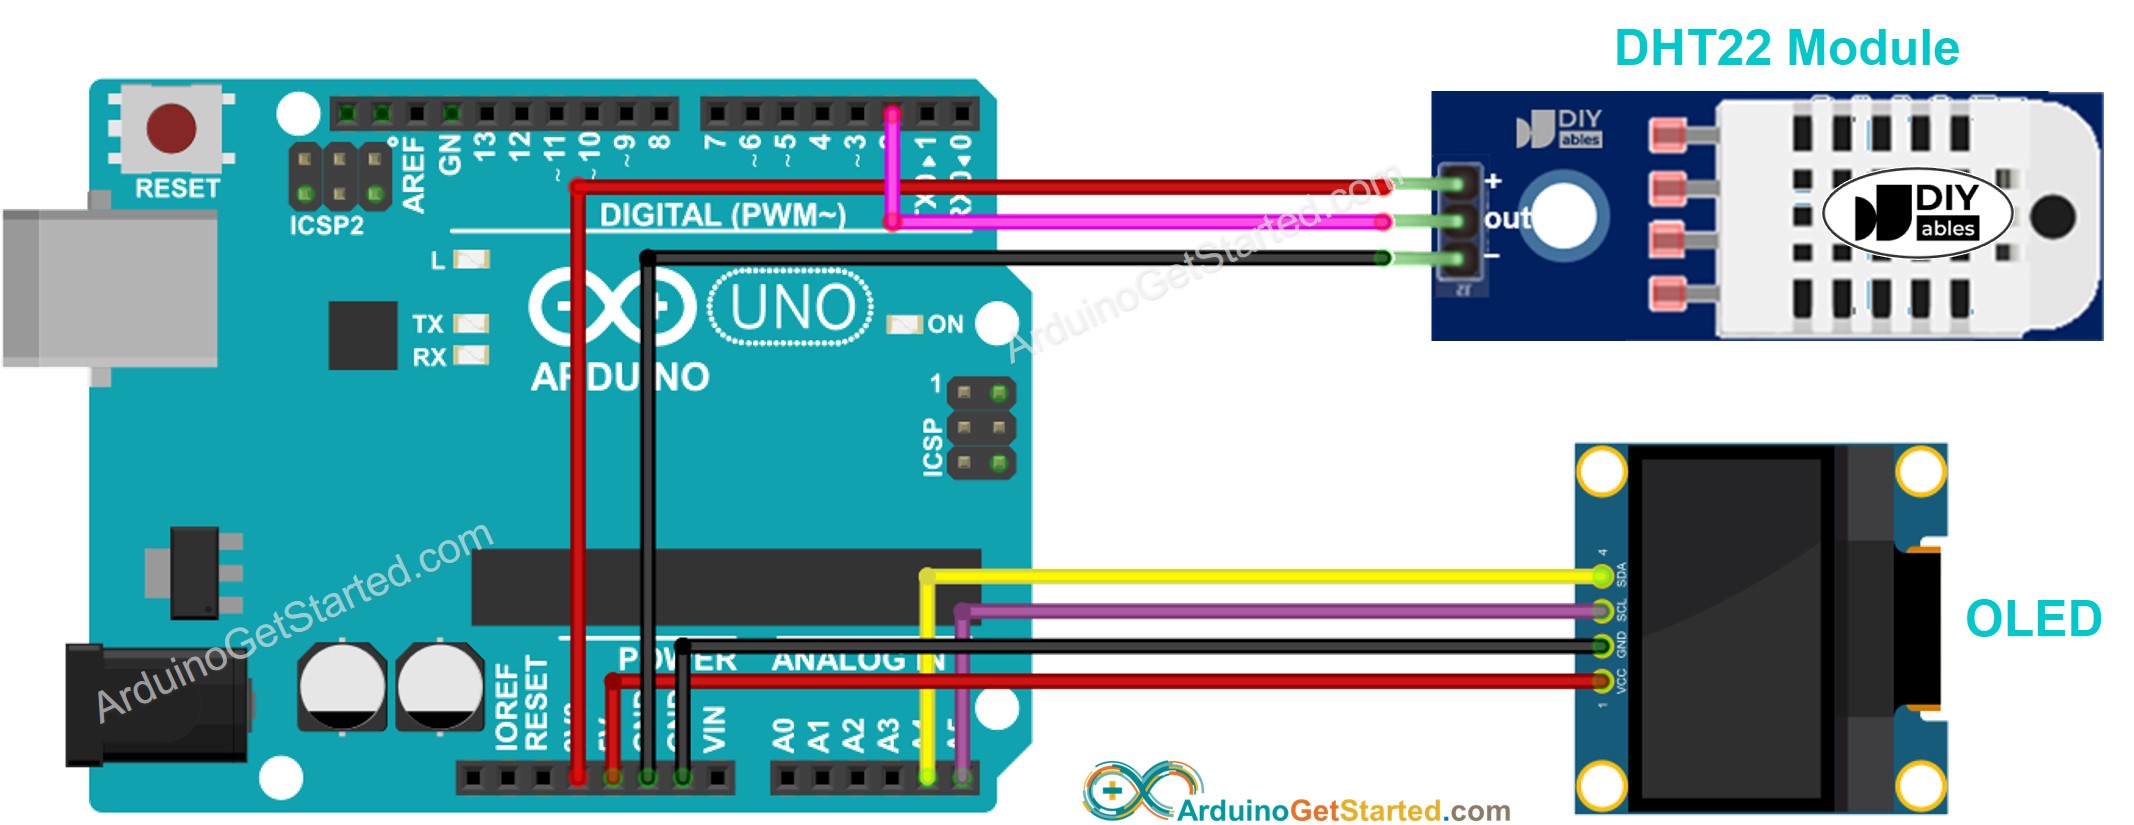 Arduino DHT22 Sensor OLED Wiring Diagram